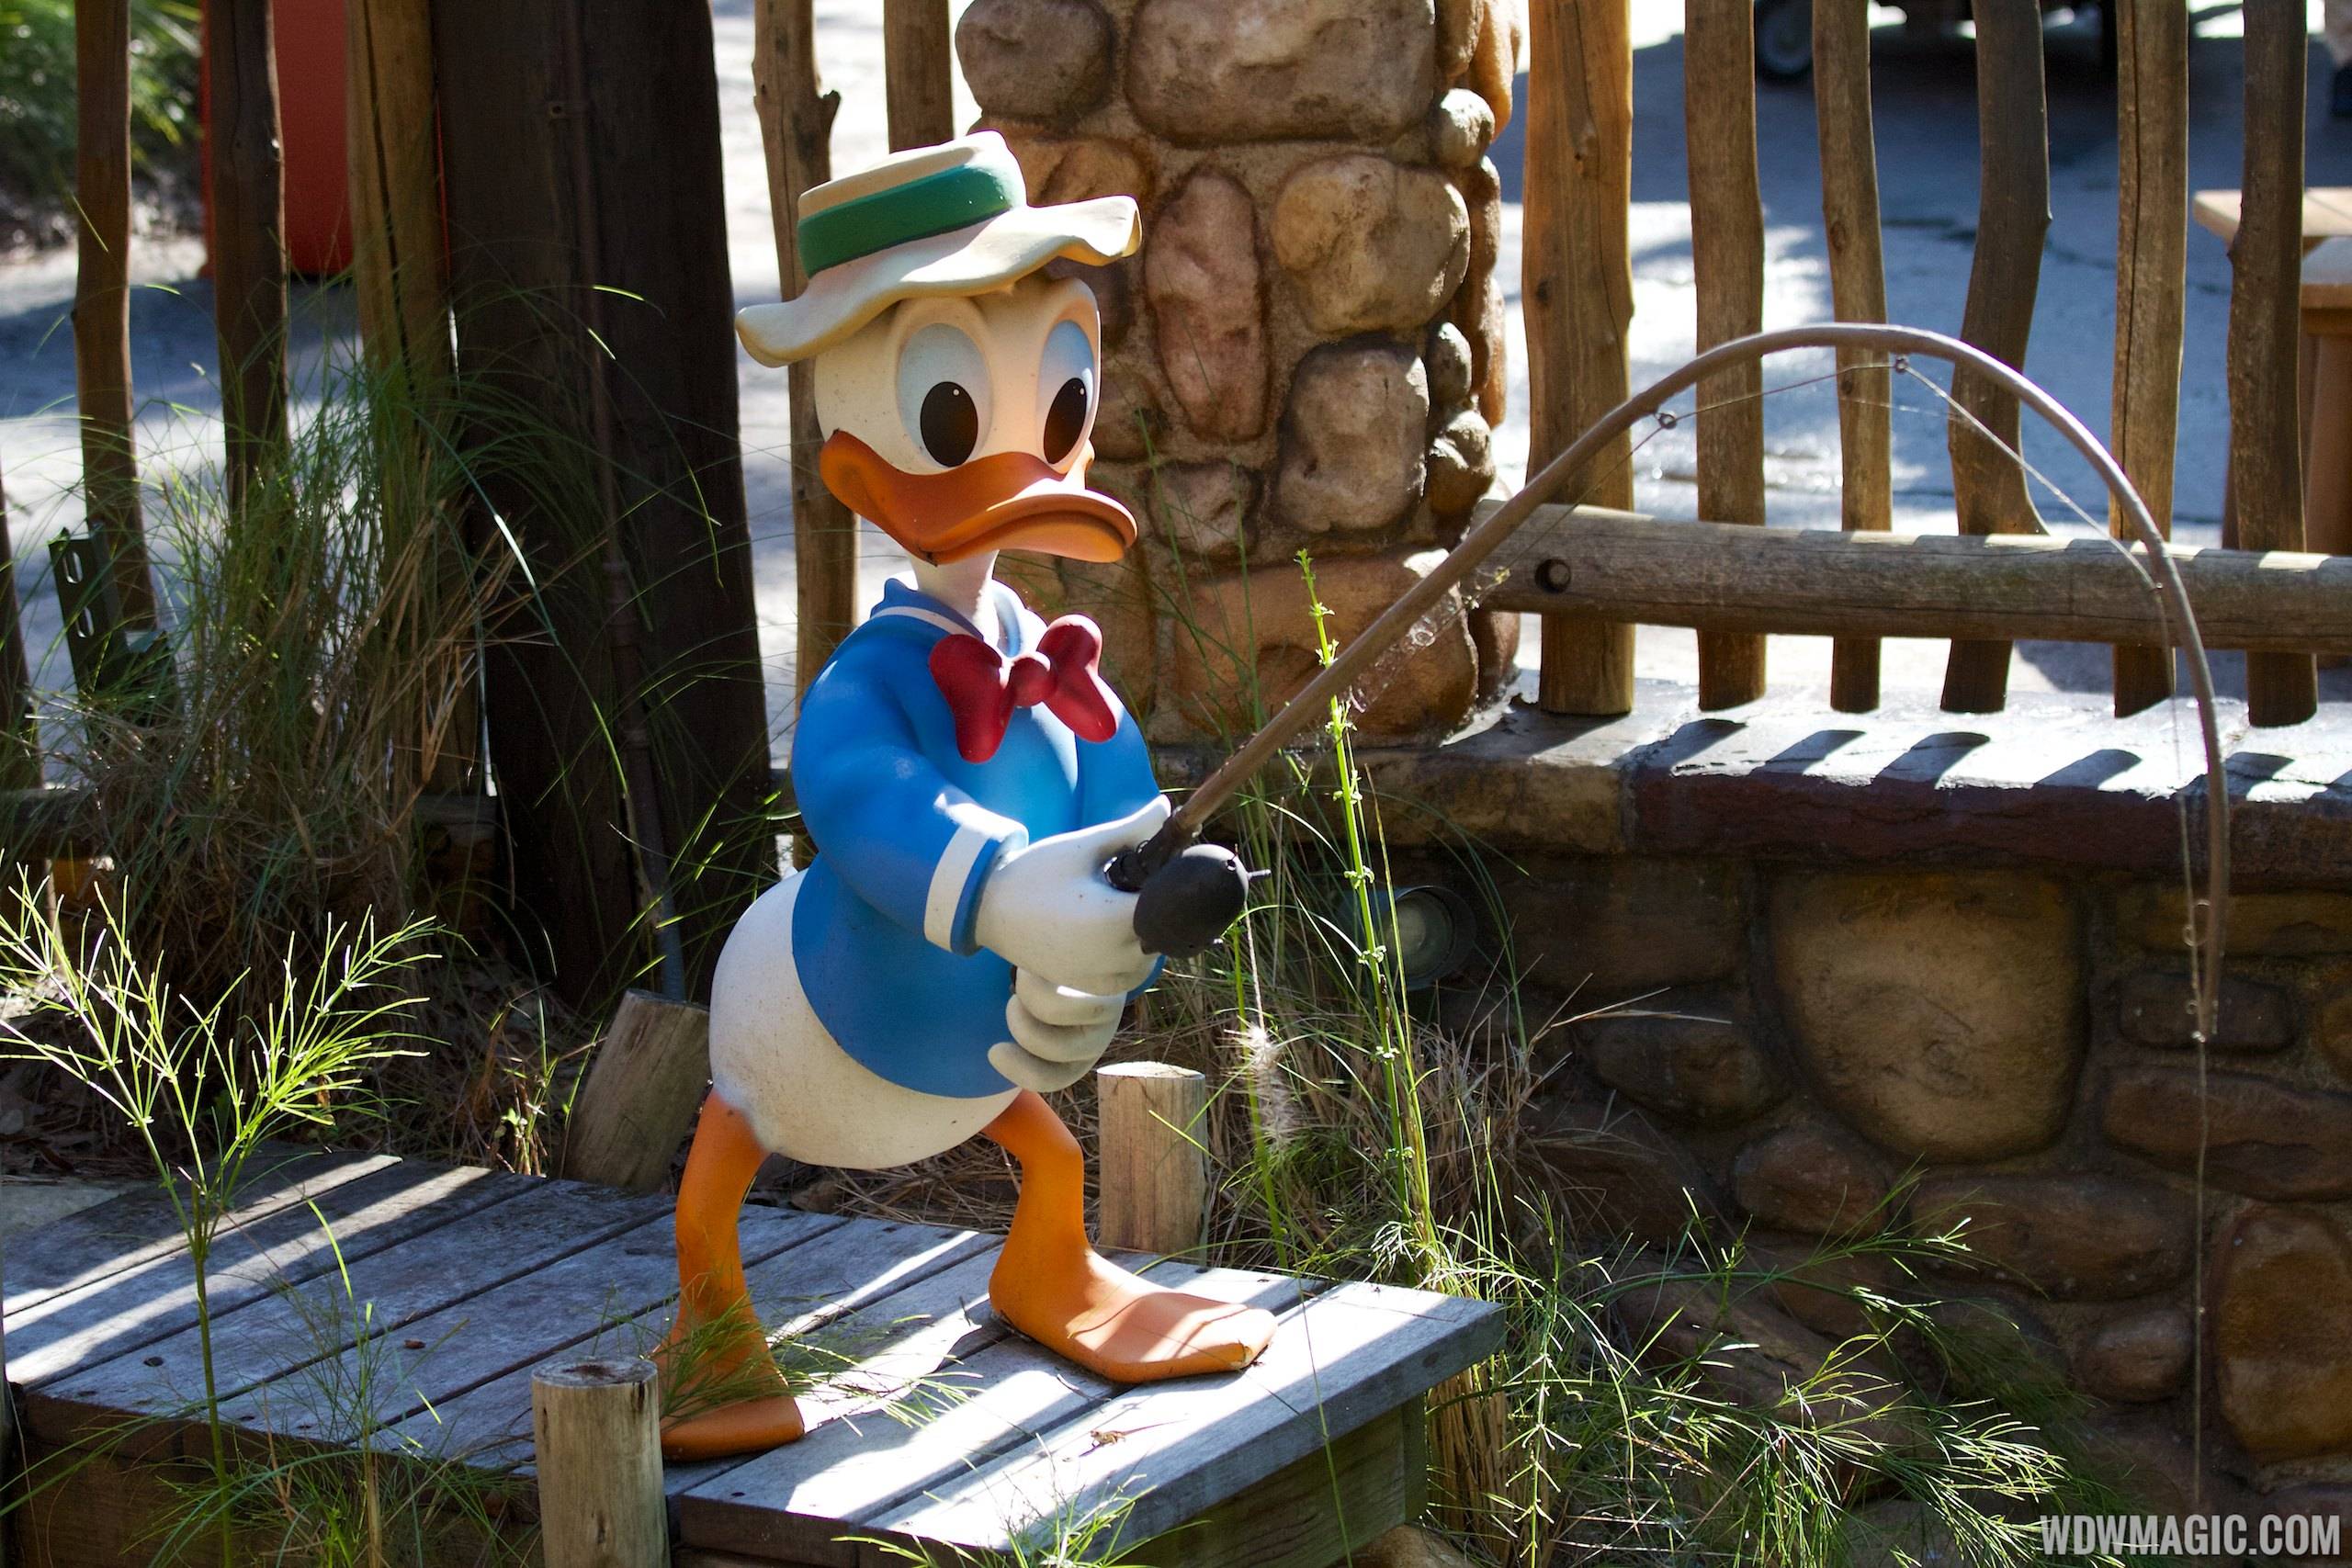 Camp Minnie-Mickey Donald Duck statue